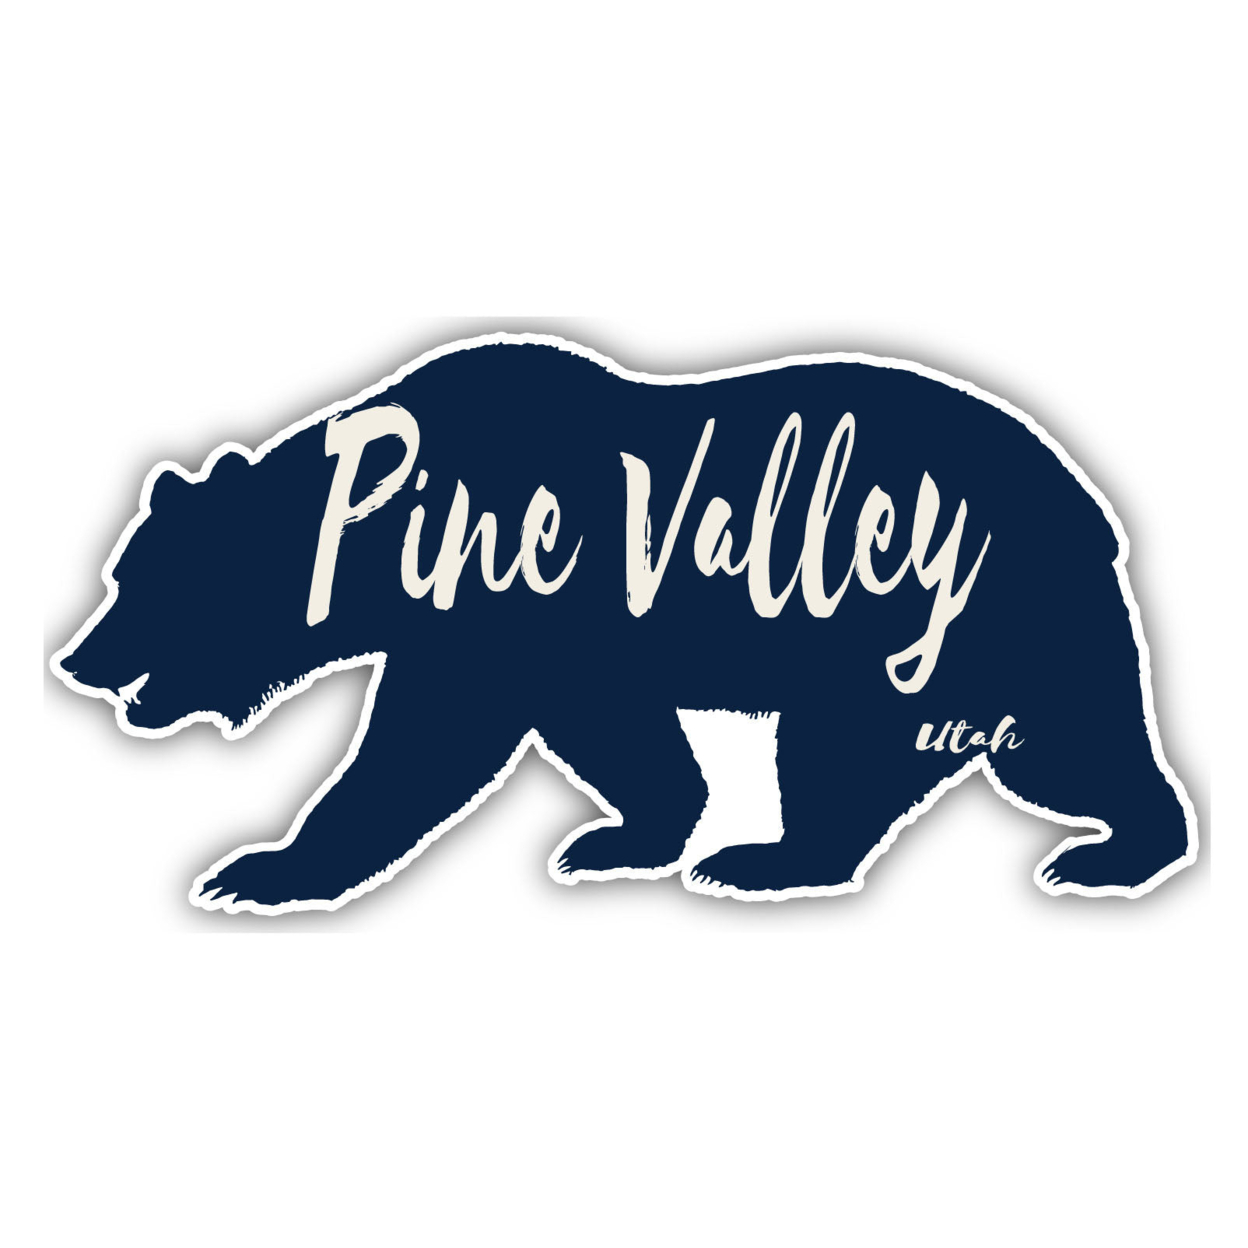 Pine Valley Utah Souvenir Decorative Stickers (Choose Theme And Size) - Single Unit, 4-Inch, Bear